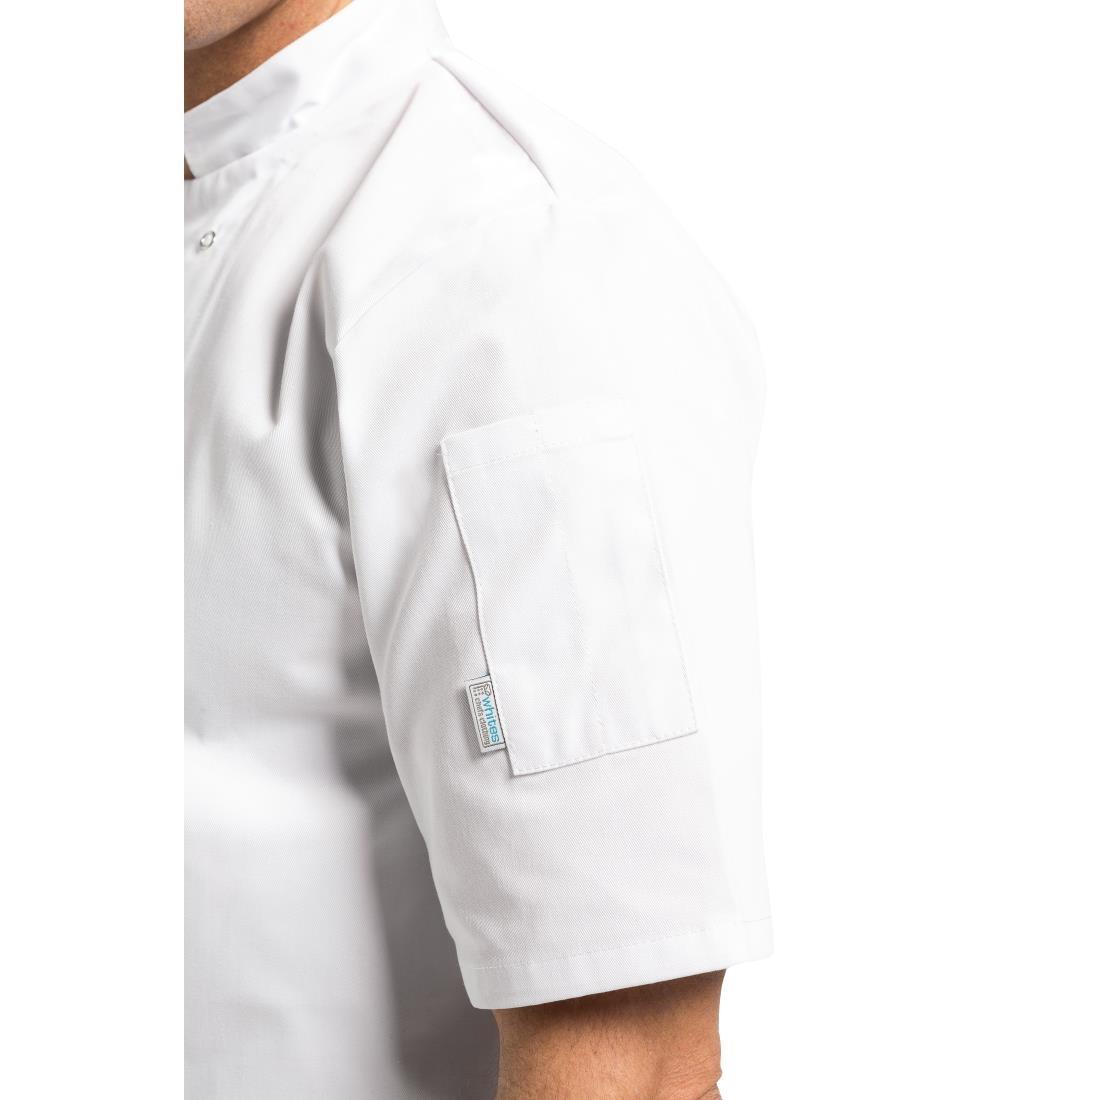 Whites Vegas Unisex Chefs Jacket Short Sleeve White S - A211-S  - 5